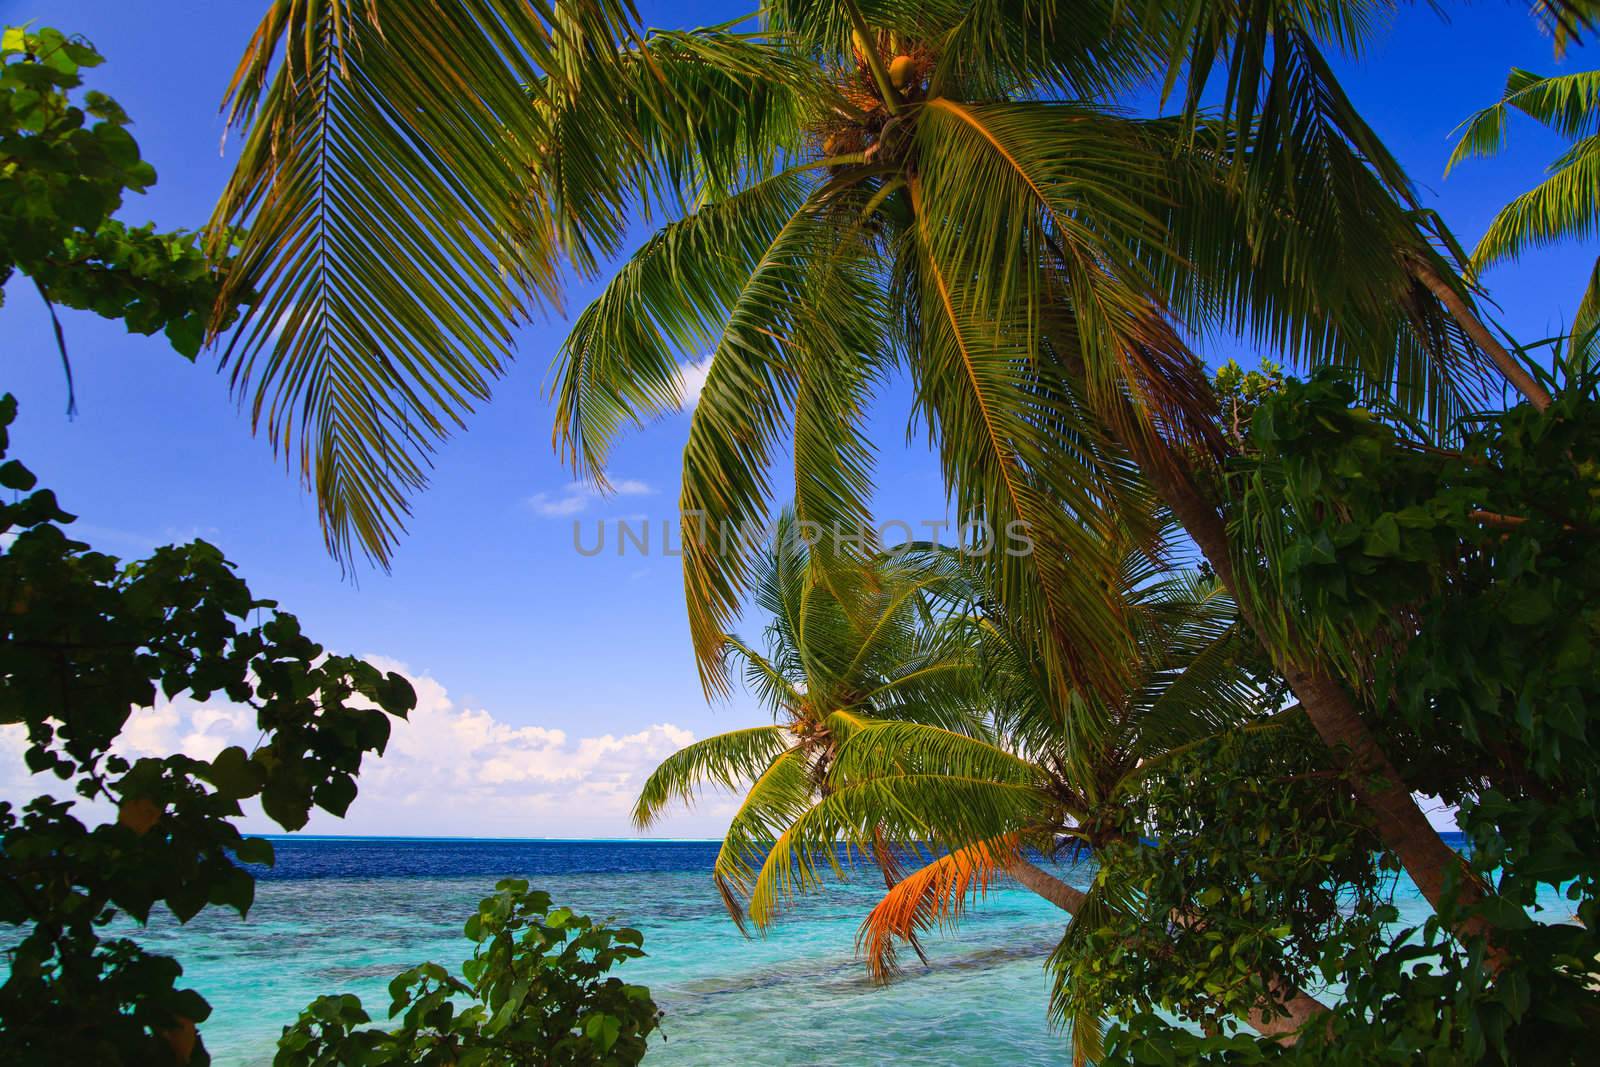 Tropical Paradise at Maldives by anobis